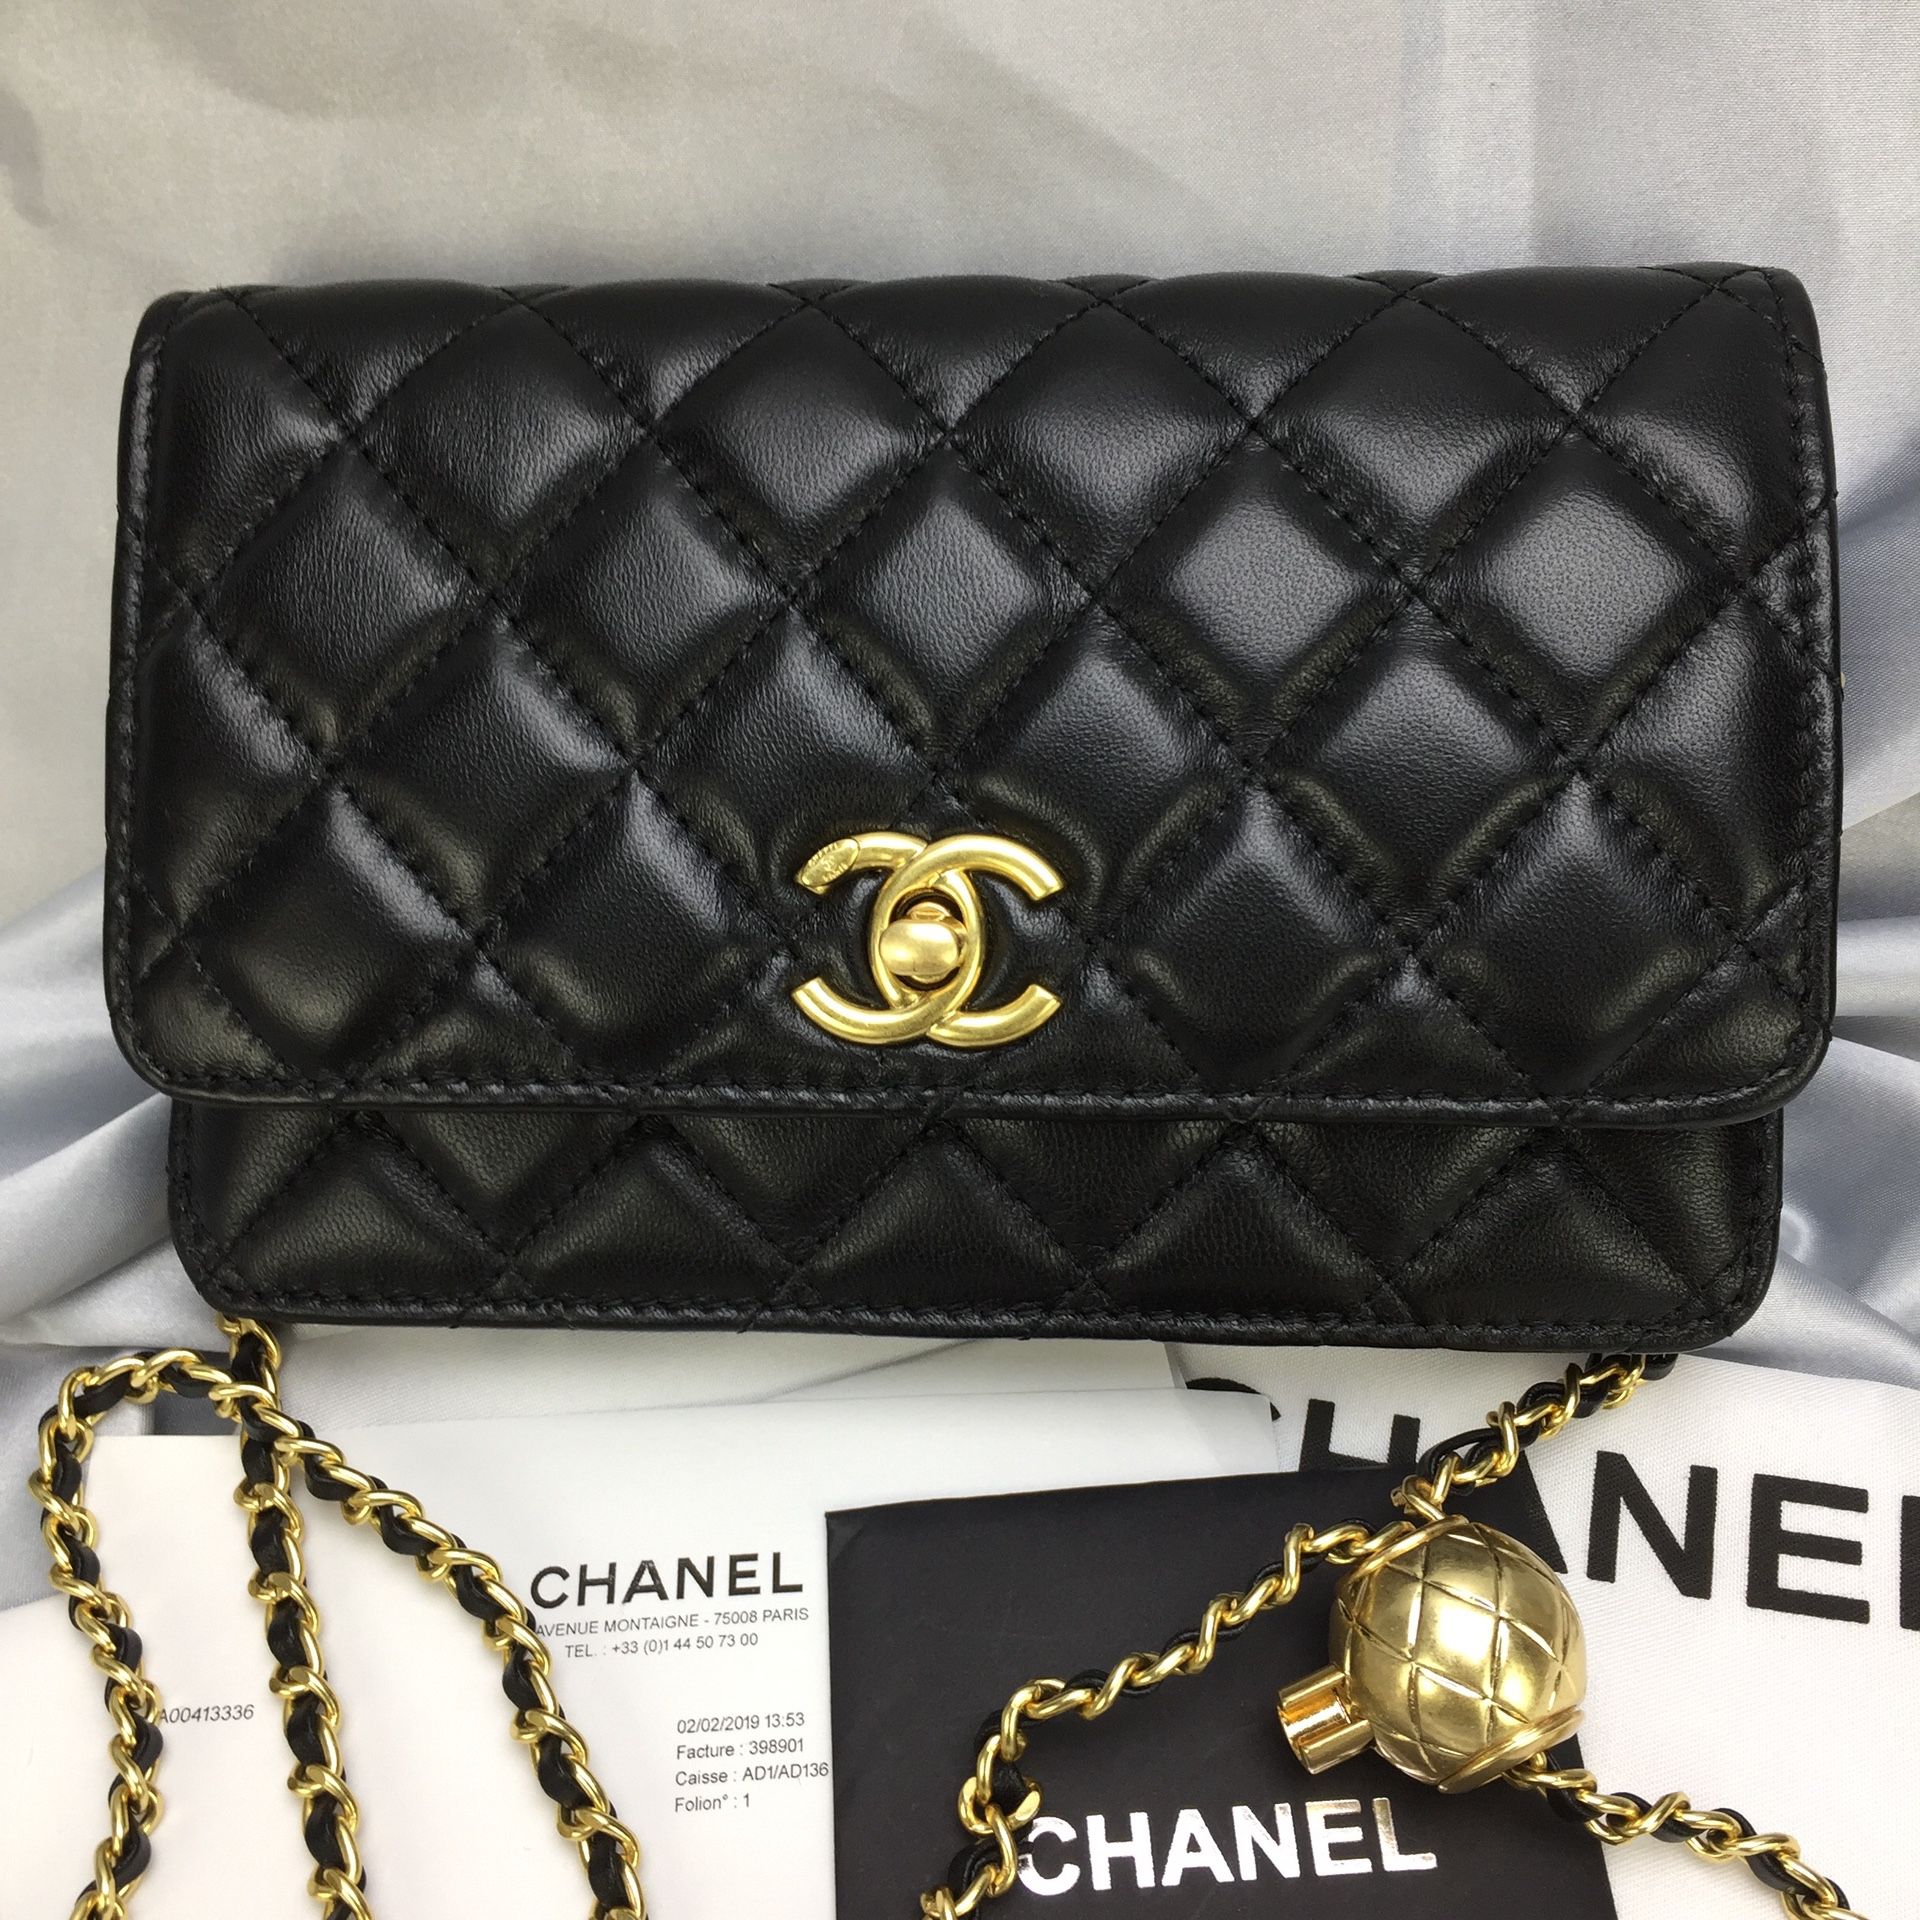 Chanel bag diamond pattern small gold ball bag ladies chain bag handbag shoulder  bag for Sale in Los Angeles, CA - OfferUp